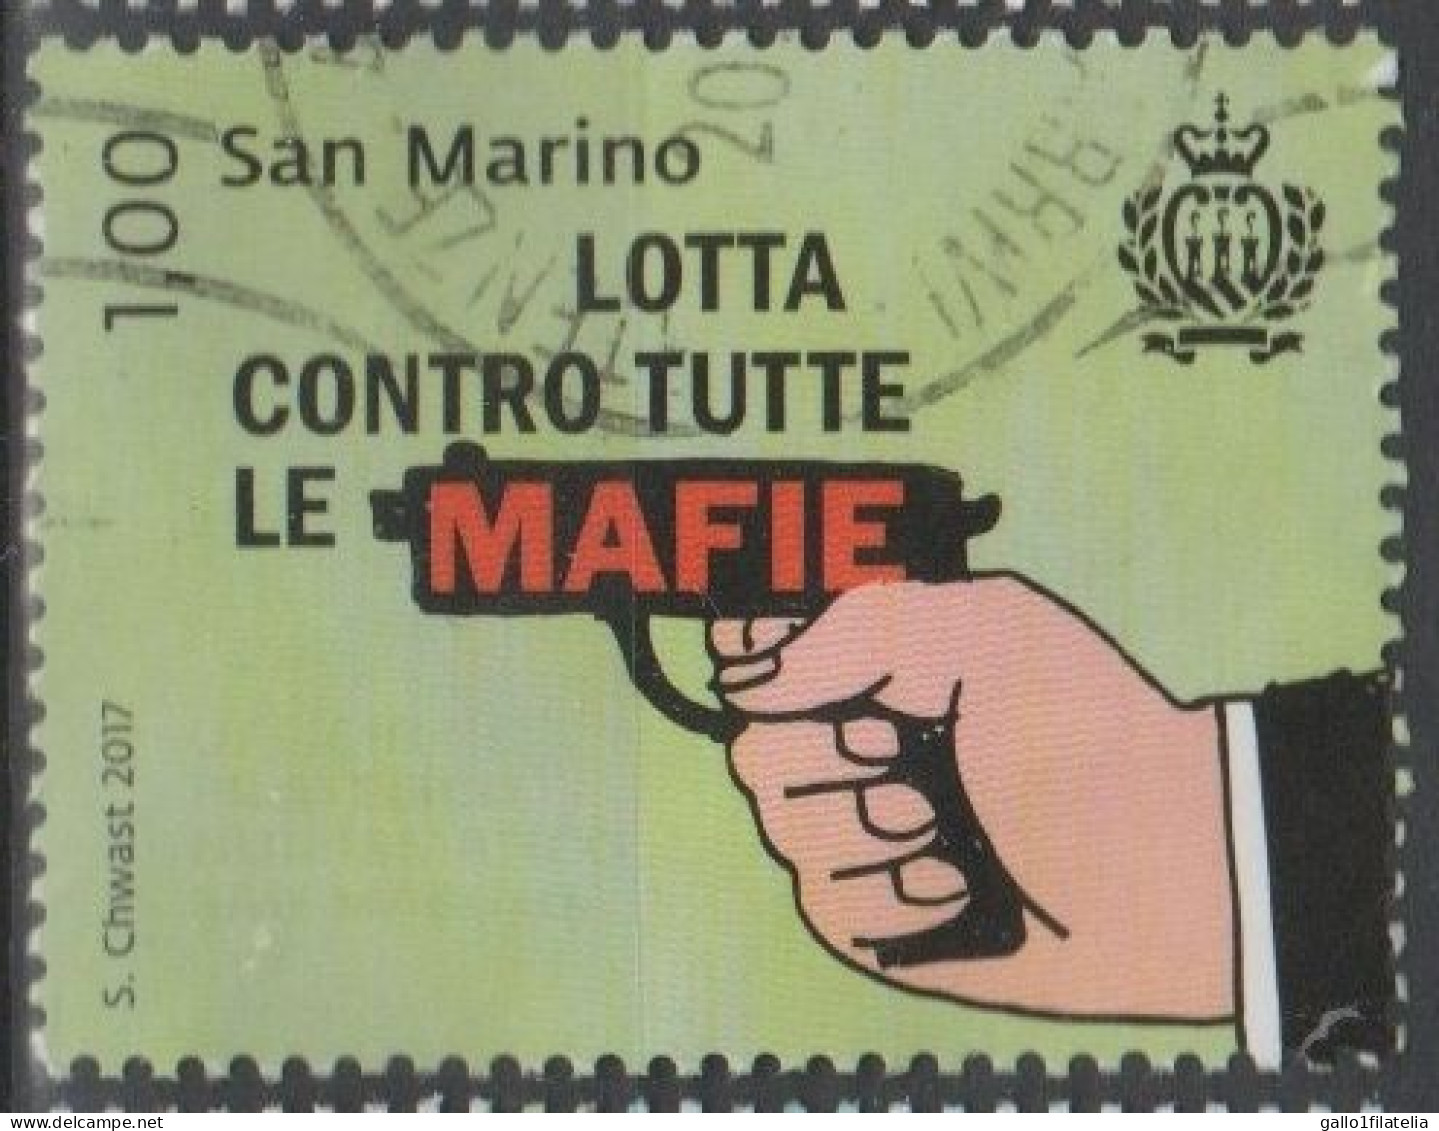 2017 - SAN MARINO - LOTTA CONTRO TUTTE LE MAFIE / FIGHT AGAINST ALL MAFIAS - USATO - Usados